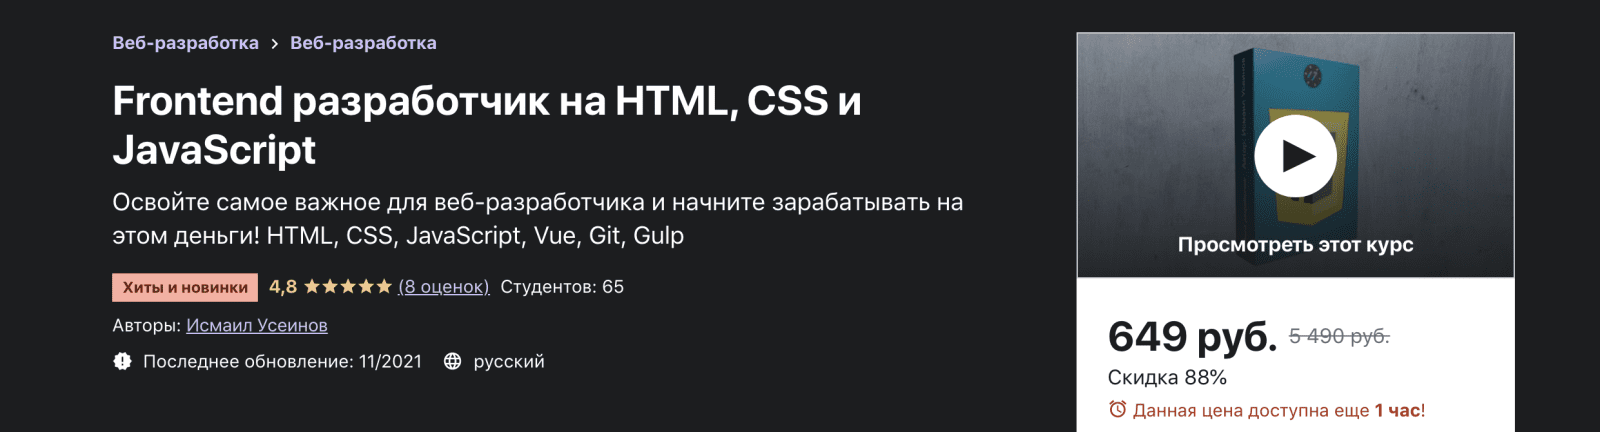 Изображение [Исмаил Усеинов] [Udemy] Frontend разработчик на HTML, CSS и JavaScript (2021) в посте 245556